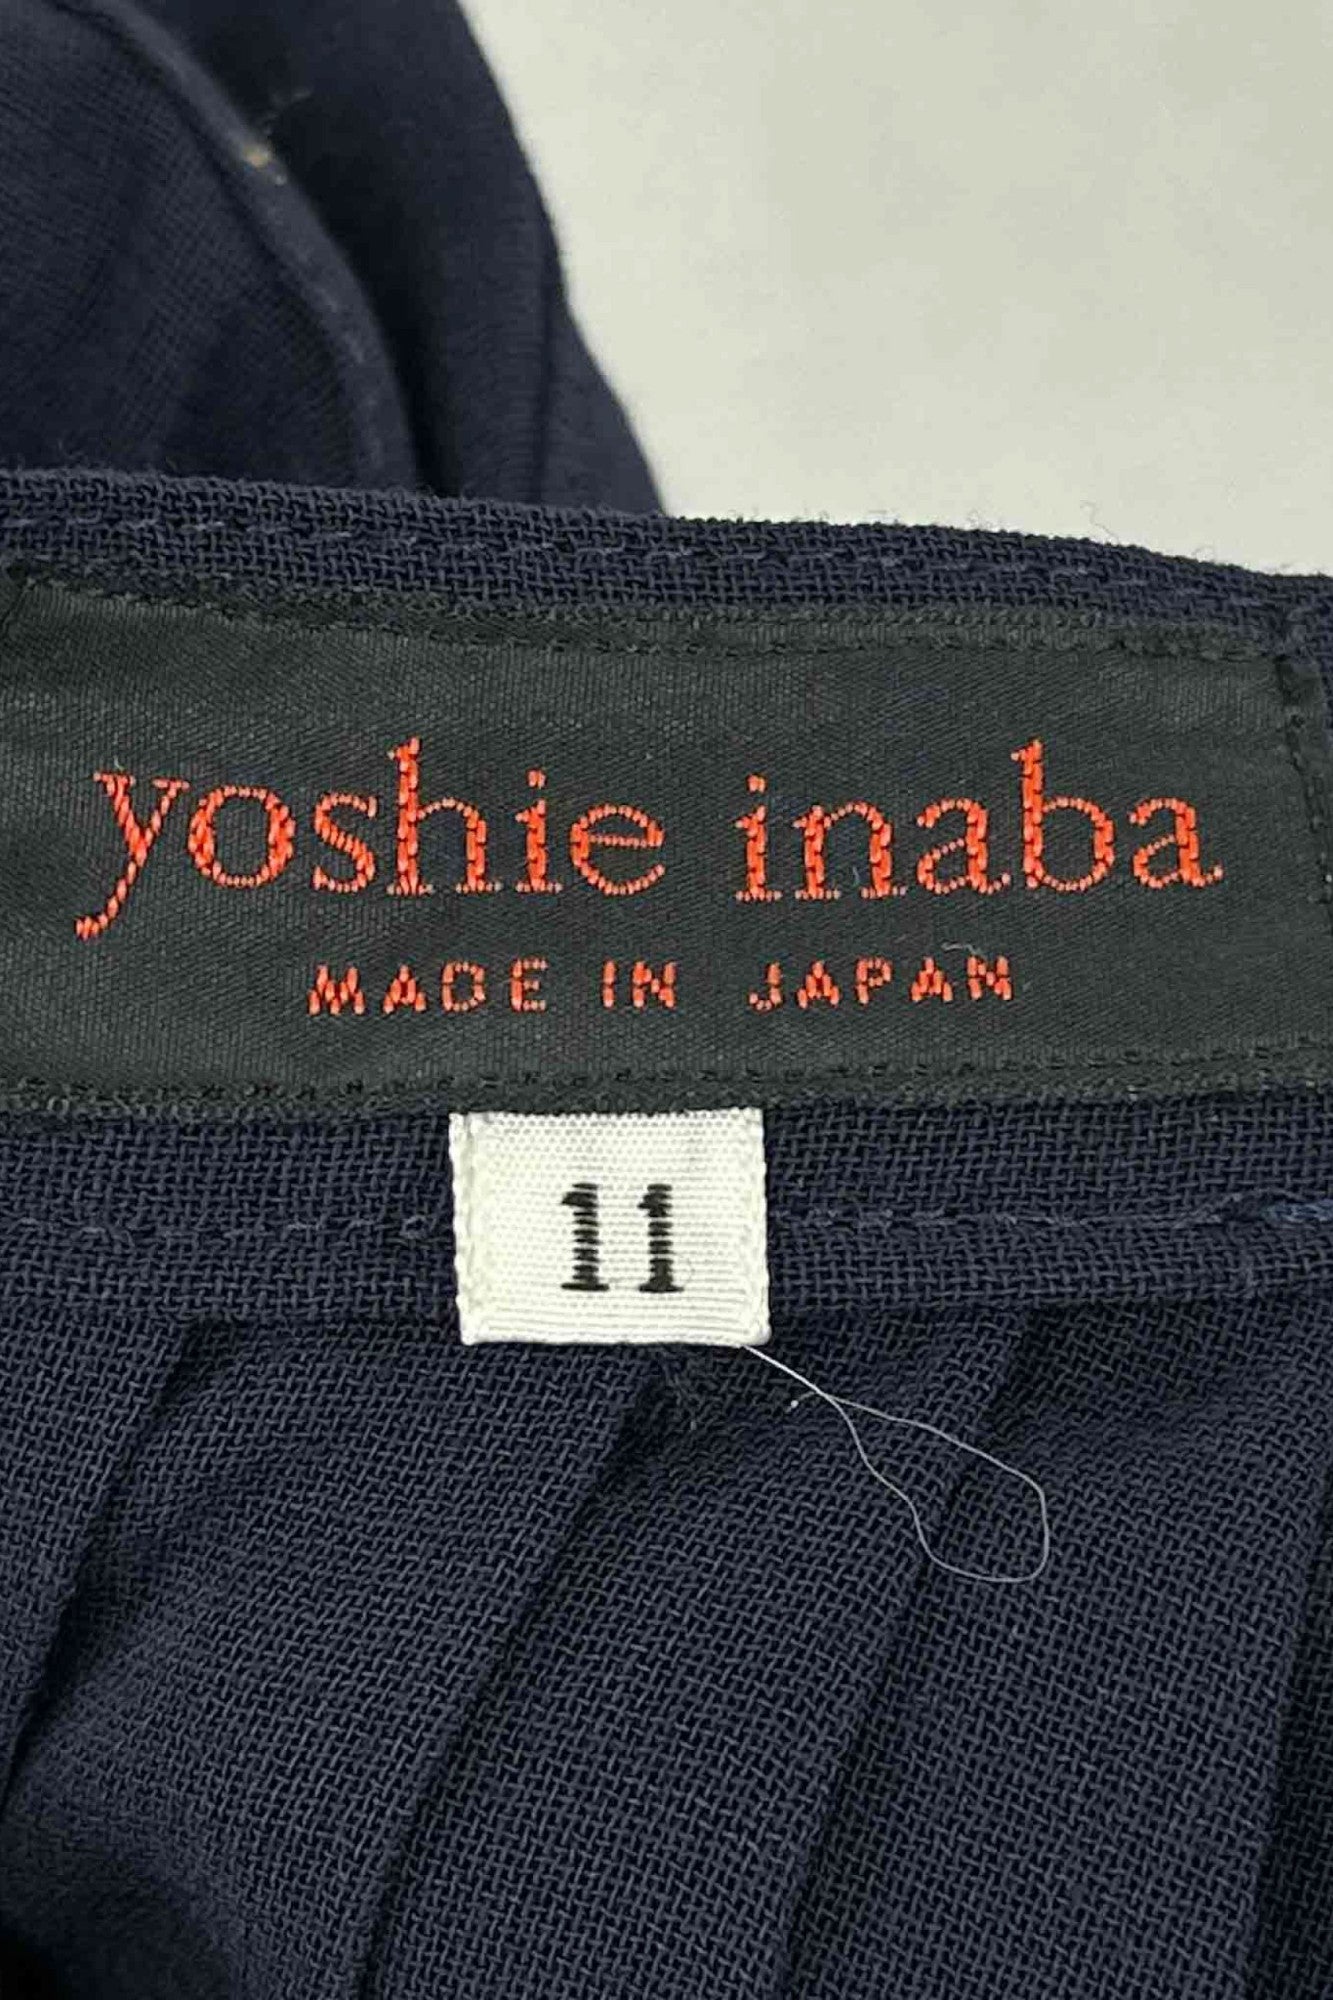 yoshie inaba navy pleats skirt